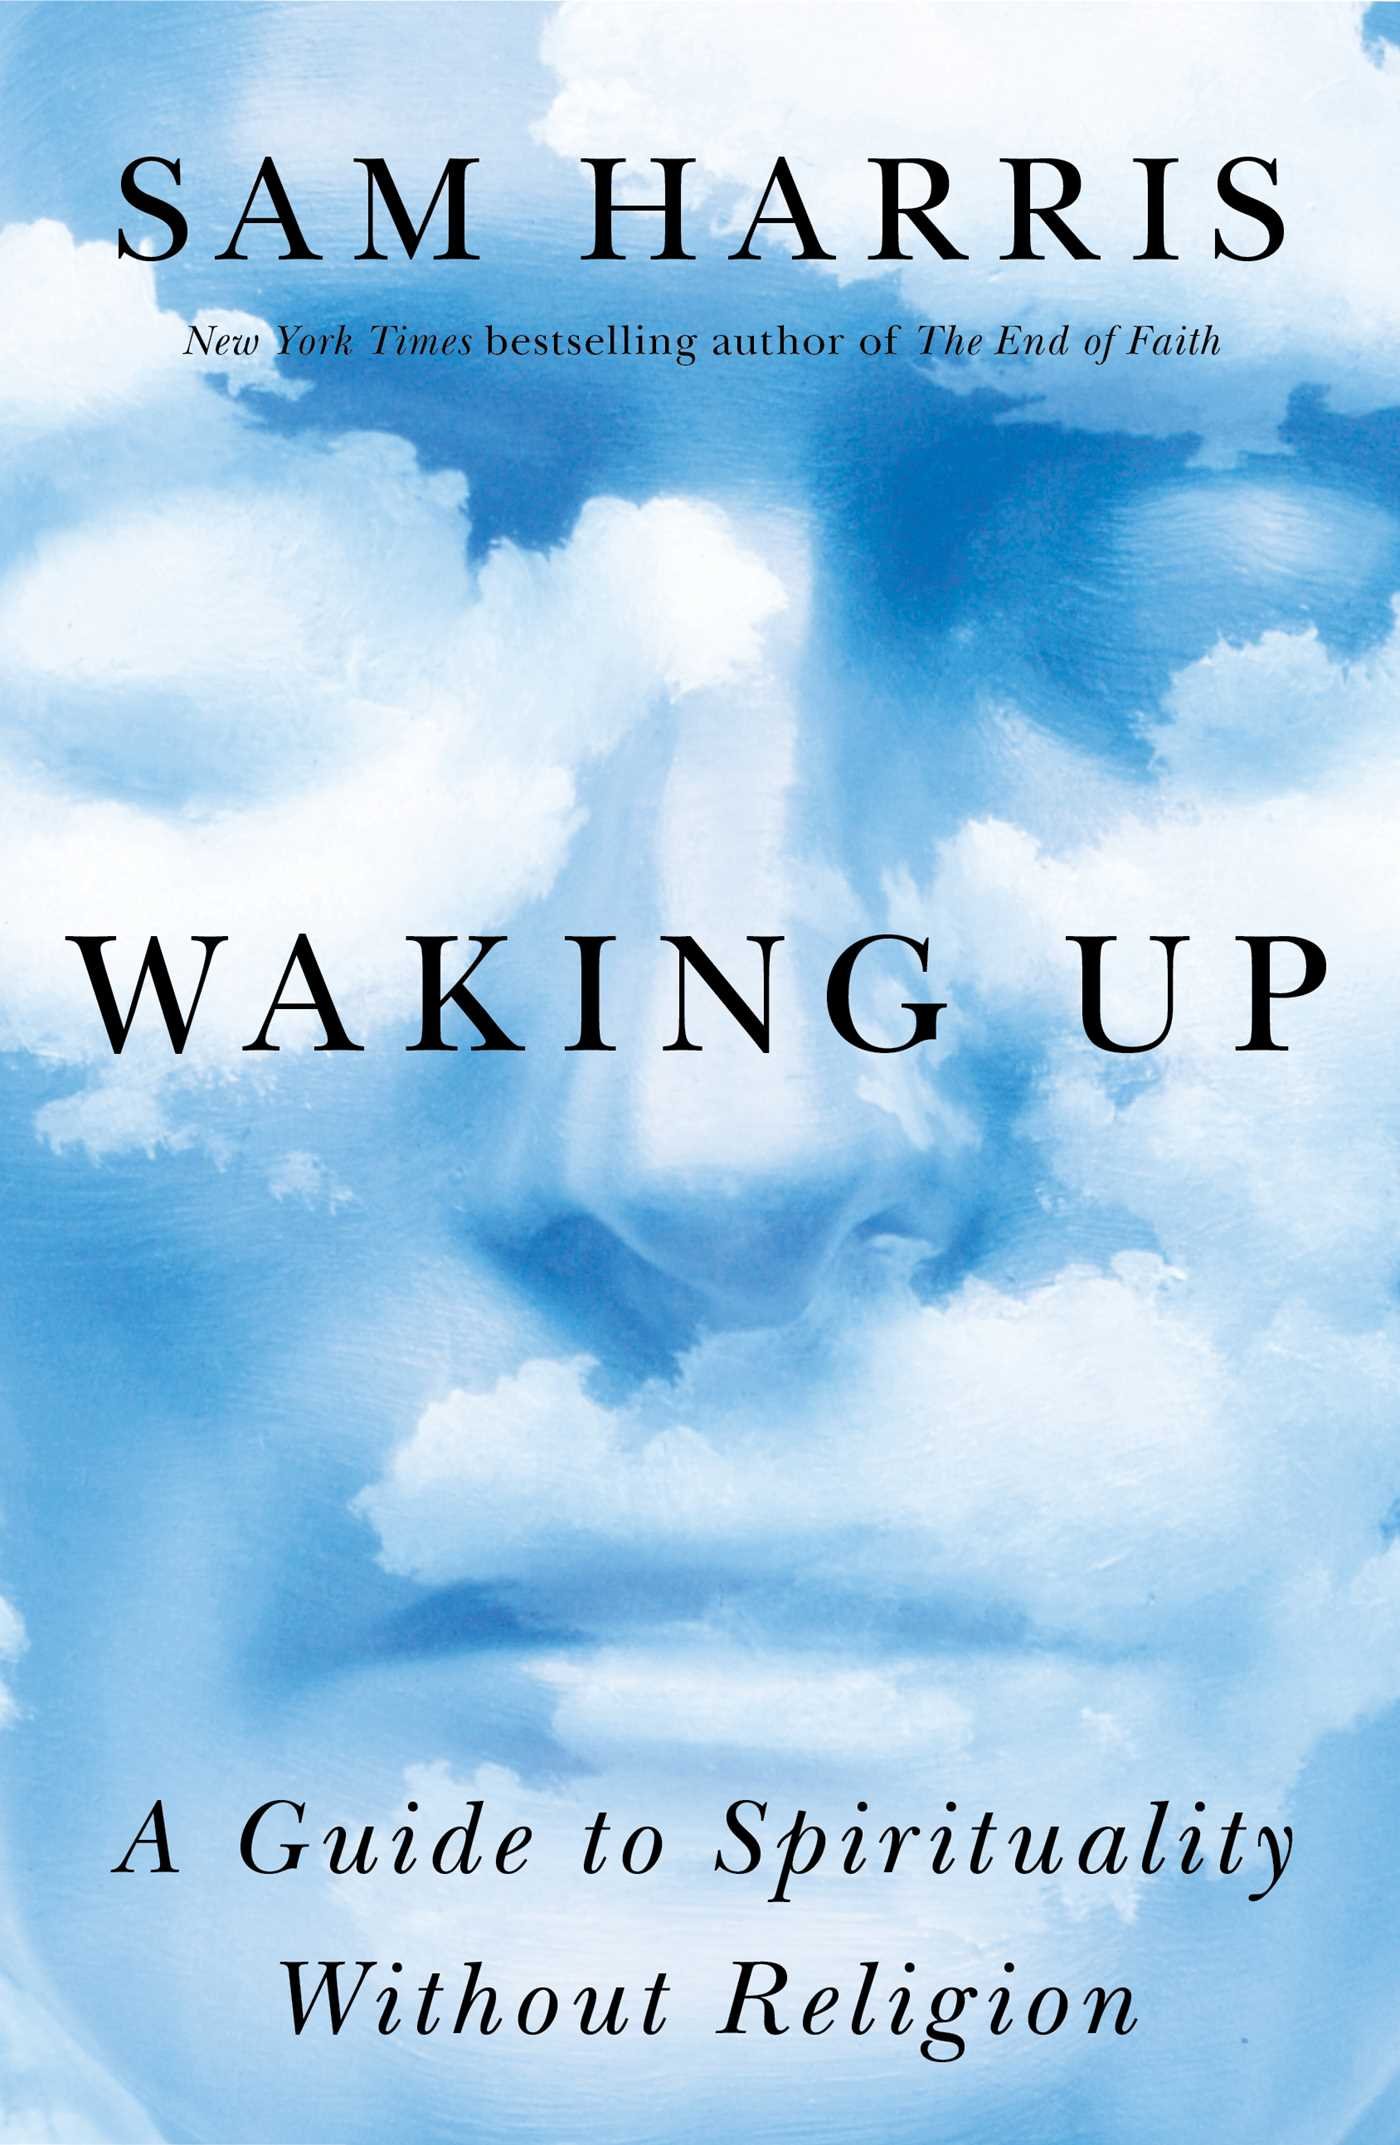 Sam Harris’ Waking Up